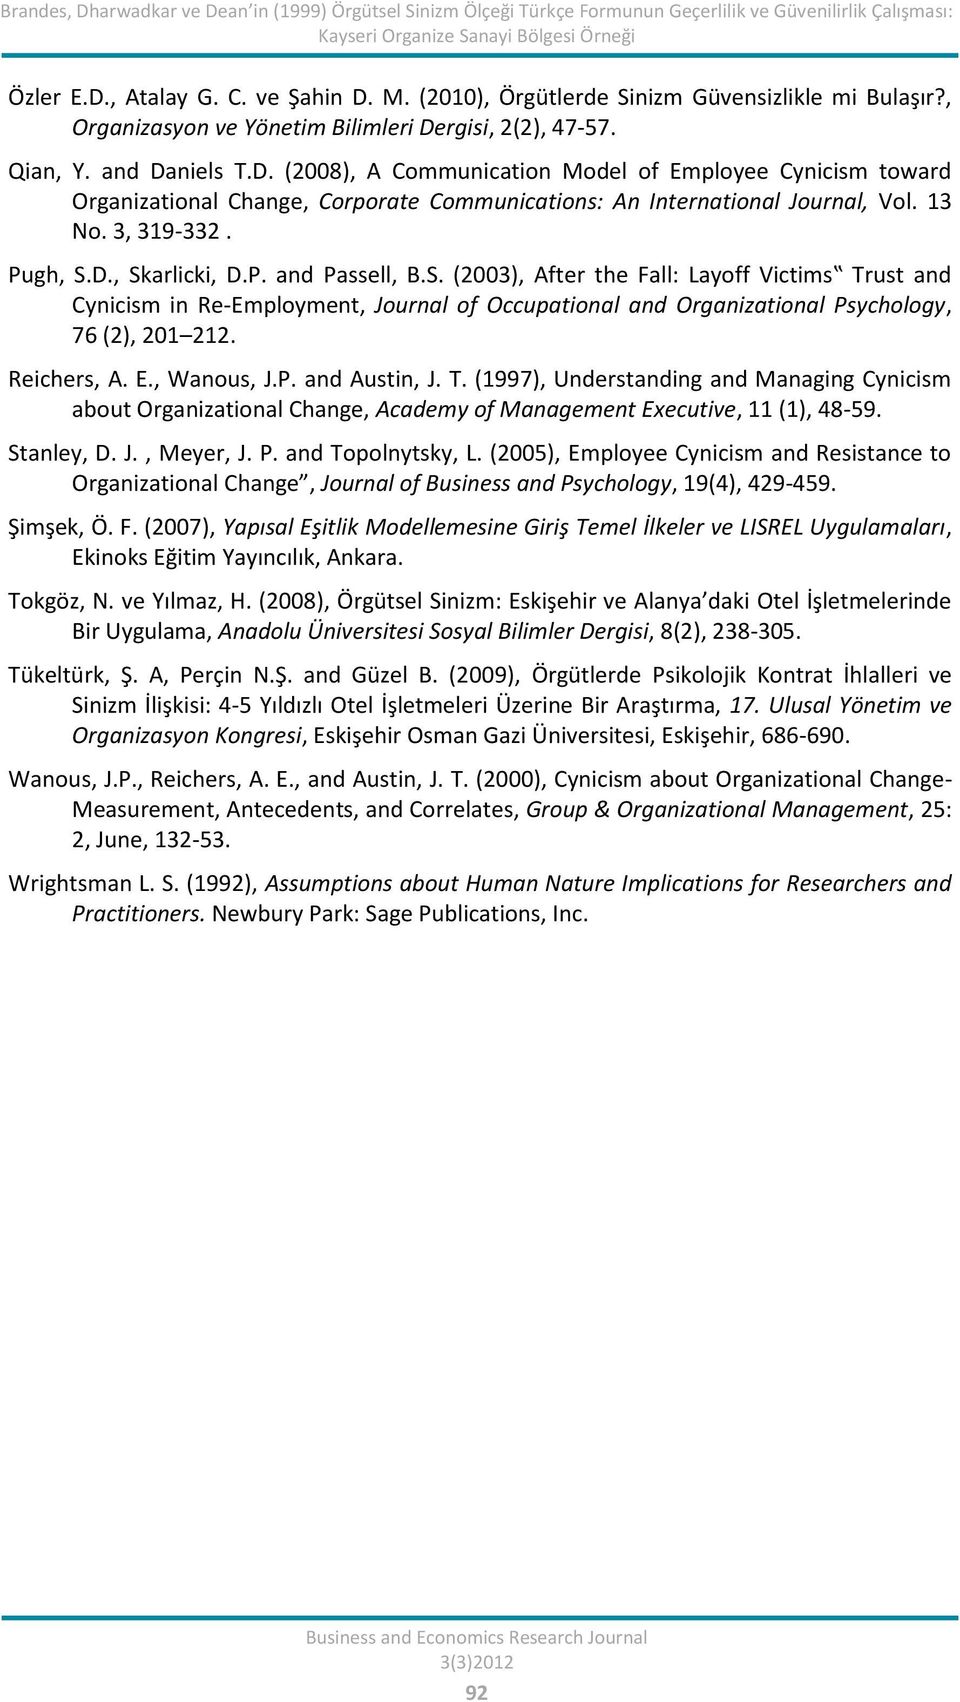 rgisi, 2(2), 47-57. Qian, Y. and Daniels T.D. (2008), A Communication Model of Employee Cynicism toward Organizational Change, Corporate Communications: An International Journal, Vol. 13 No.